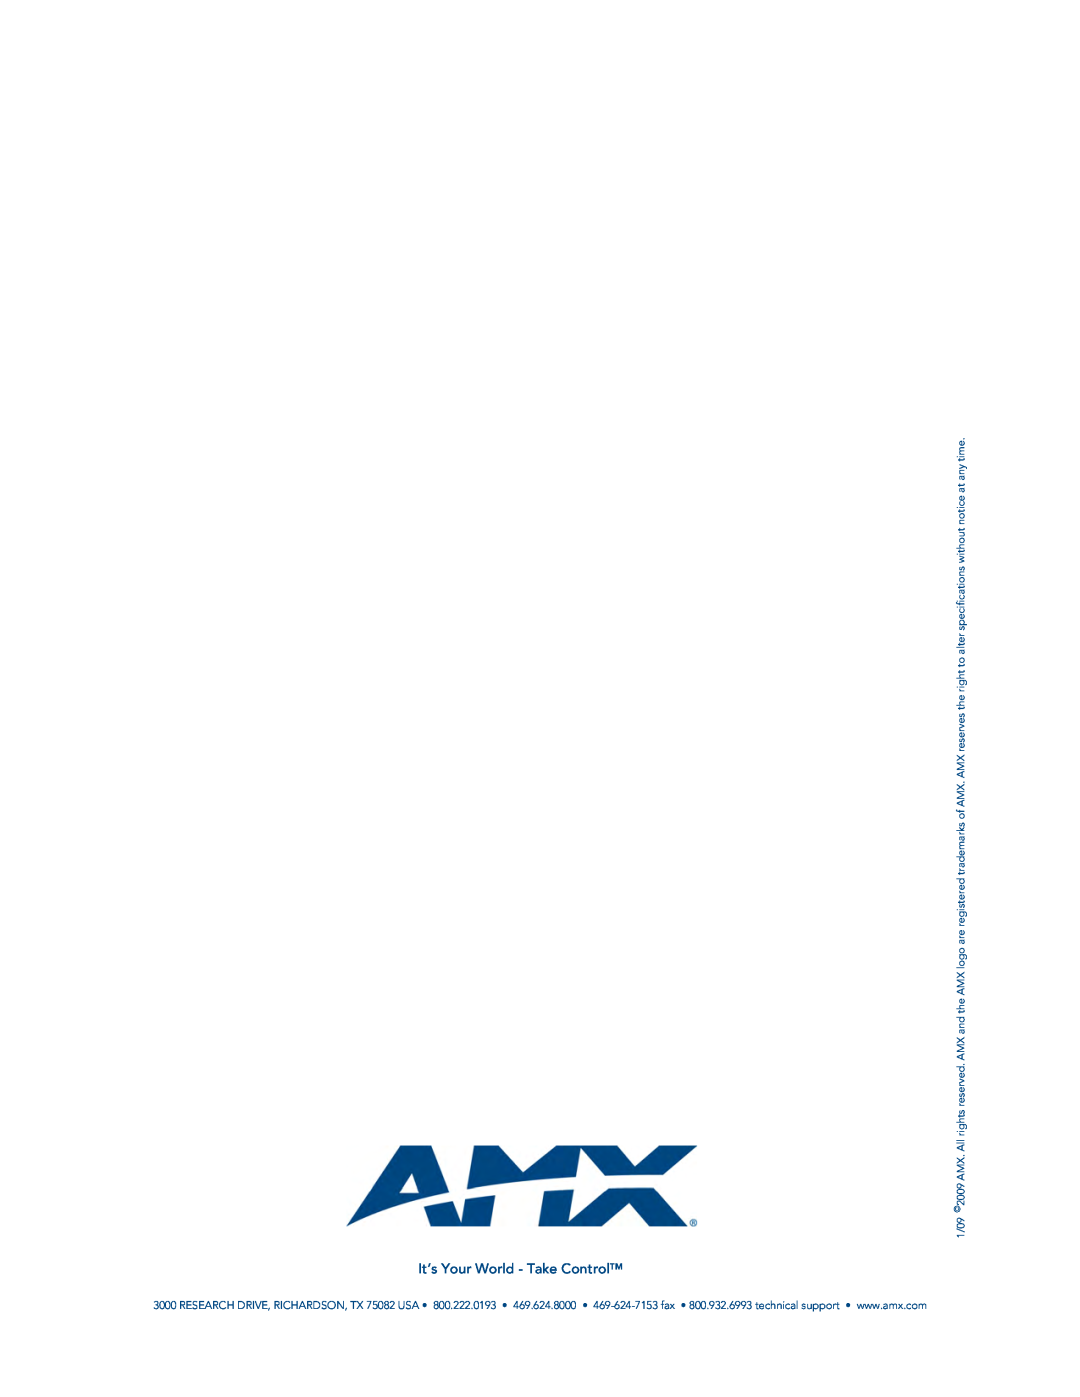 AMX NXI manual It’s Your World - Take Control 